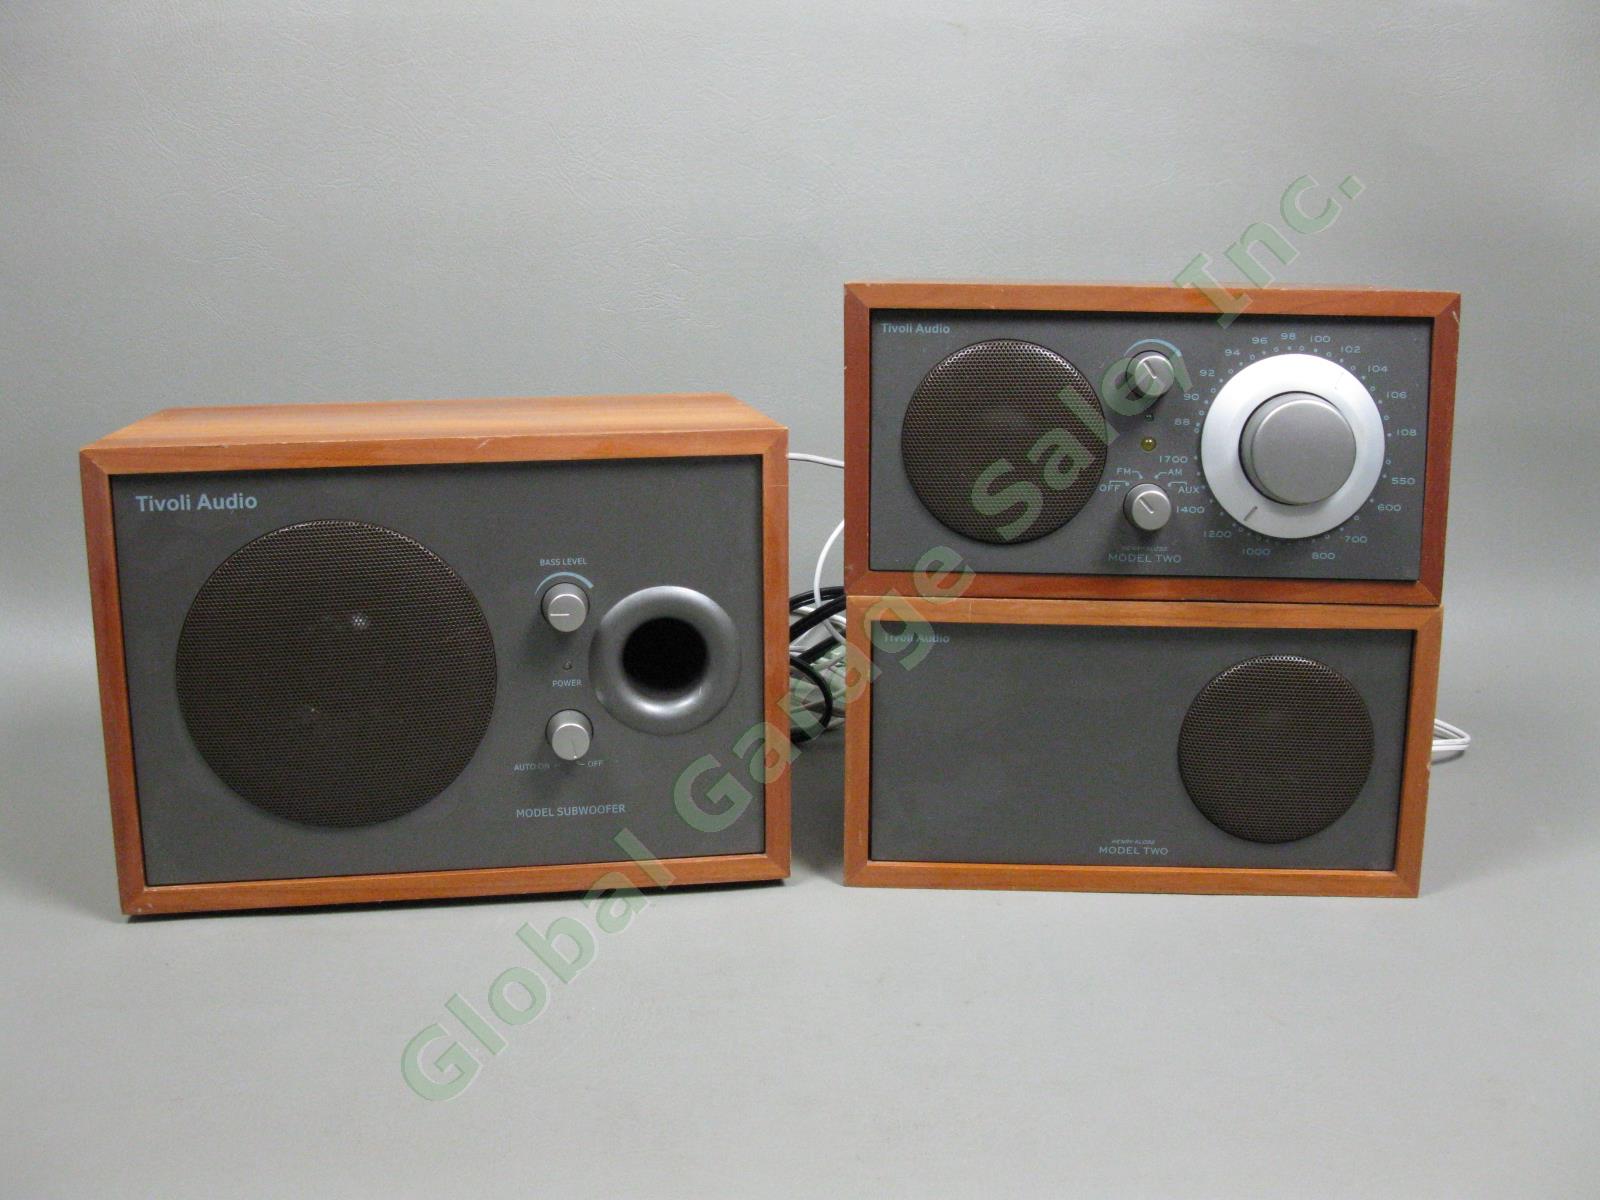 Tivoli Audio Model Two Henry Kloss AM/FM Radio Subwoofer Speakers Tested IWC NR